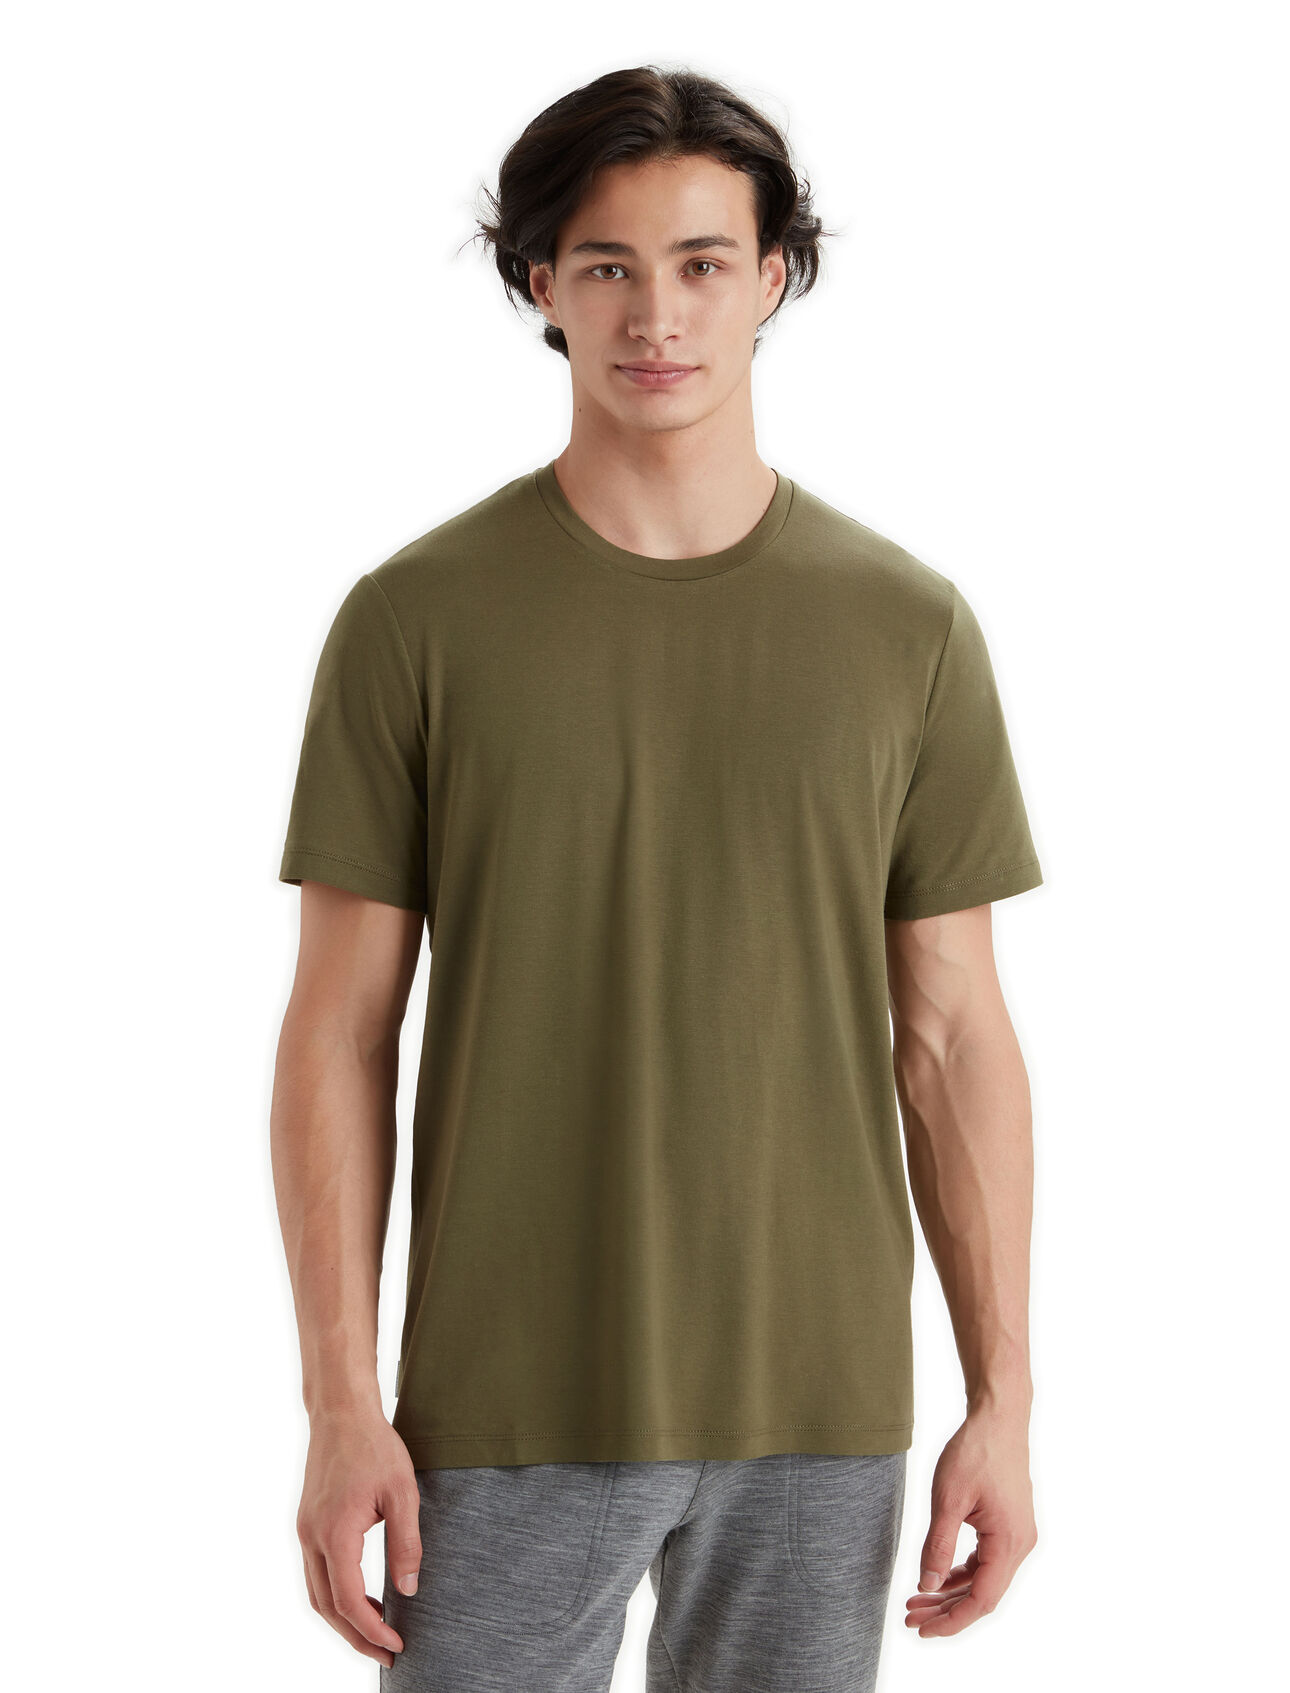 Short Sleeve Shirts, Men's Short Sleeve Shirts & Cotton Shirts